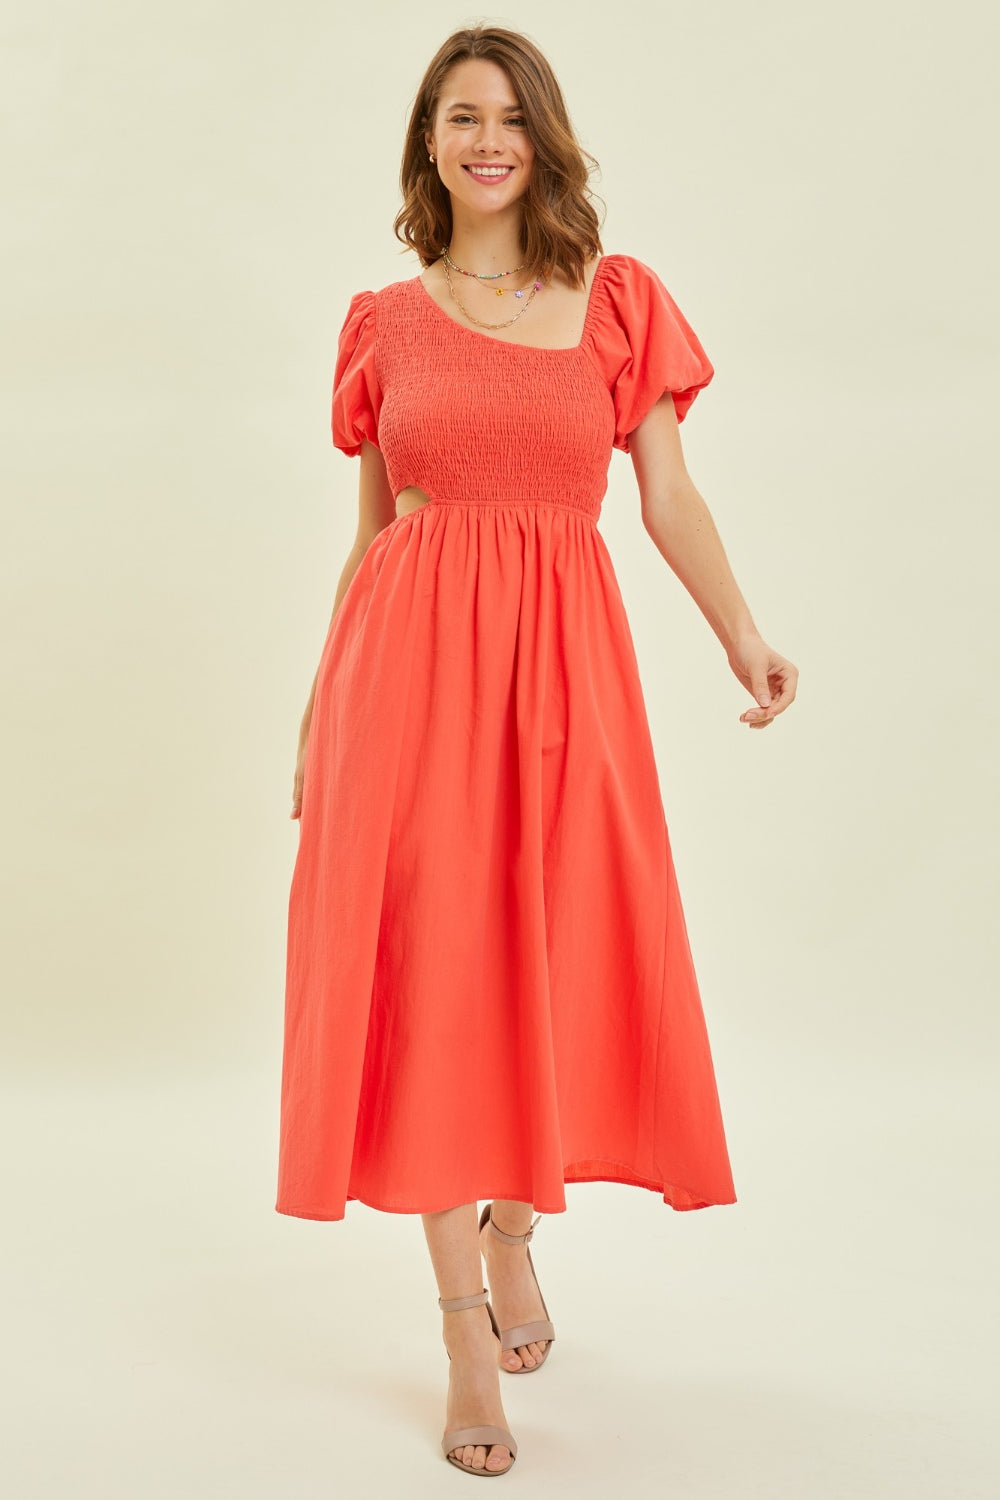 TEEK - Cherry Red Smocked Cutout Dress DRESS TEEK Trend   